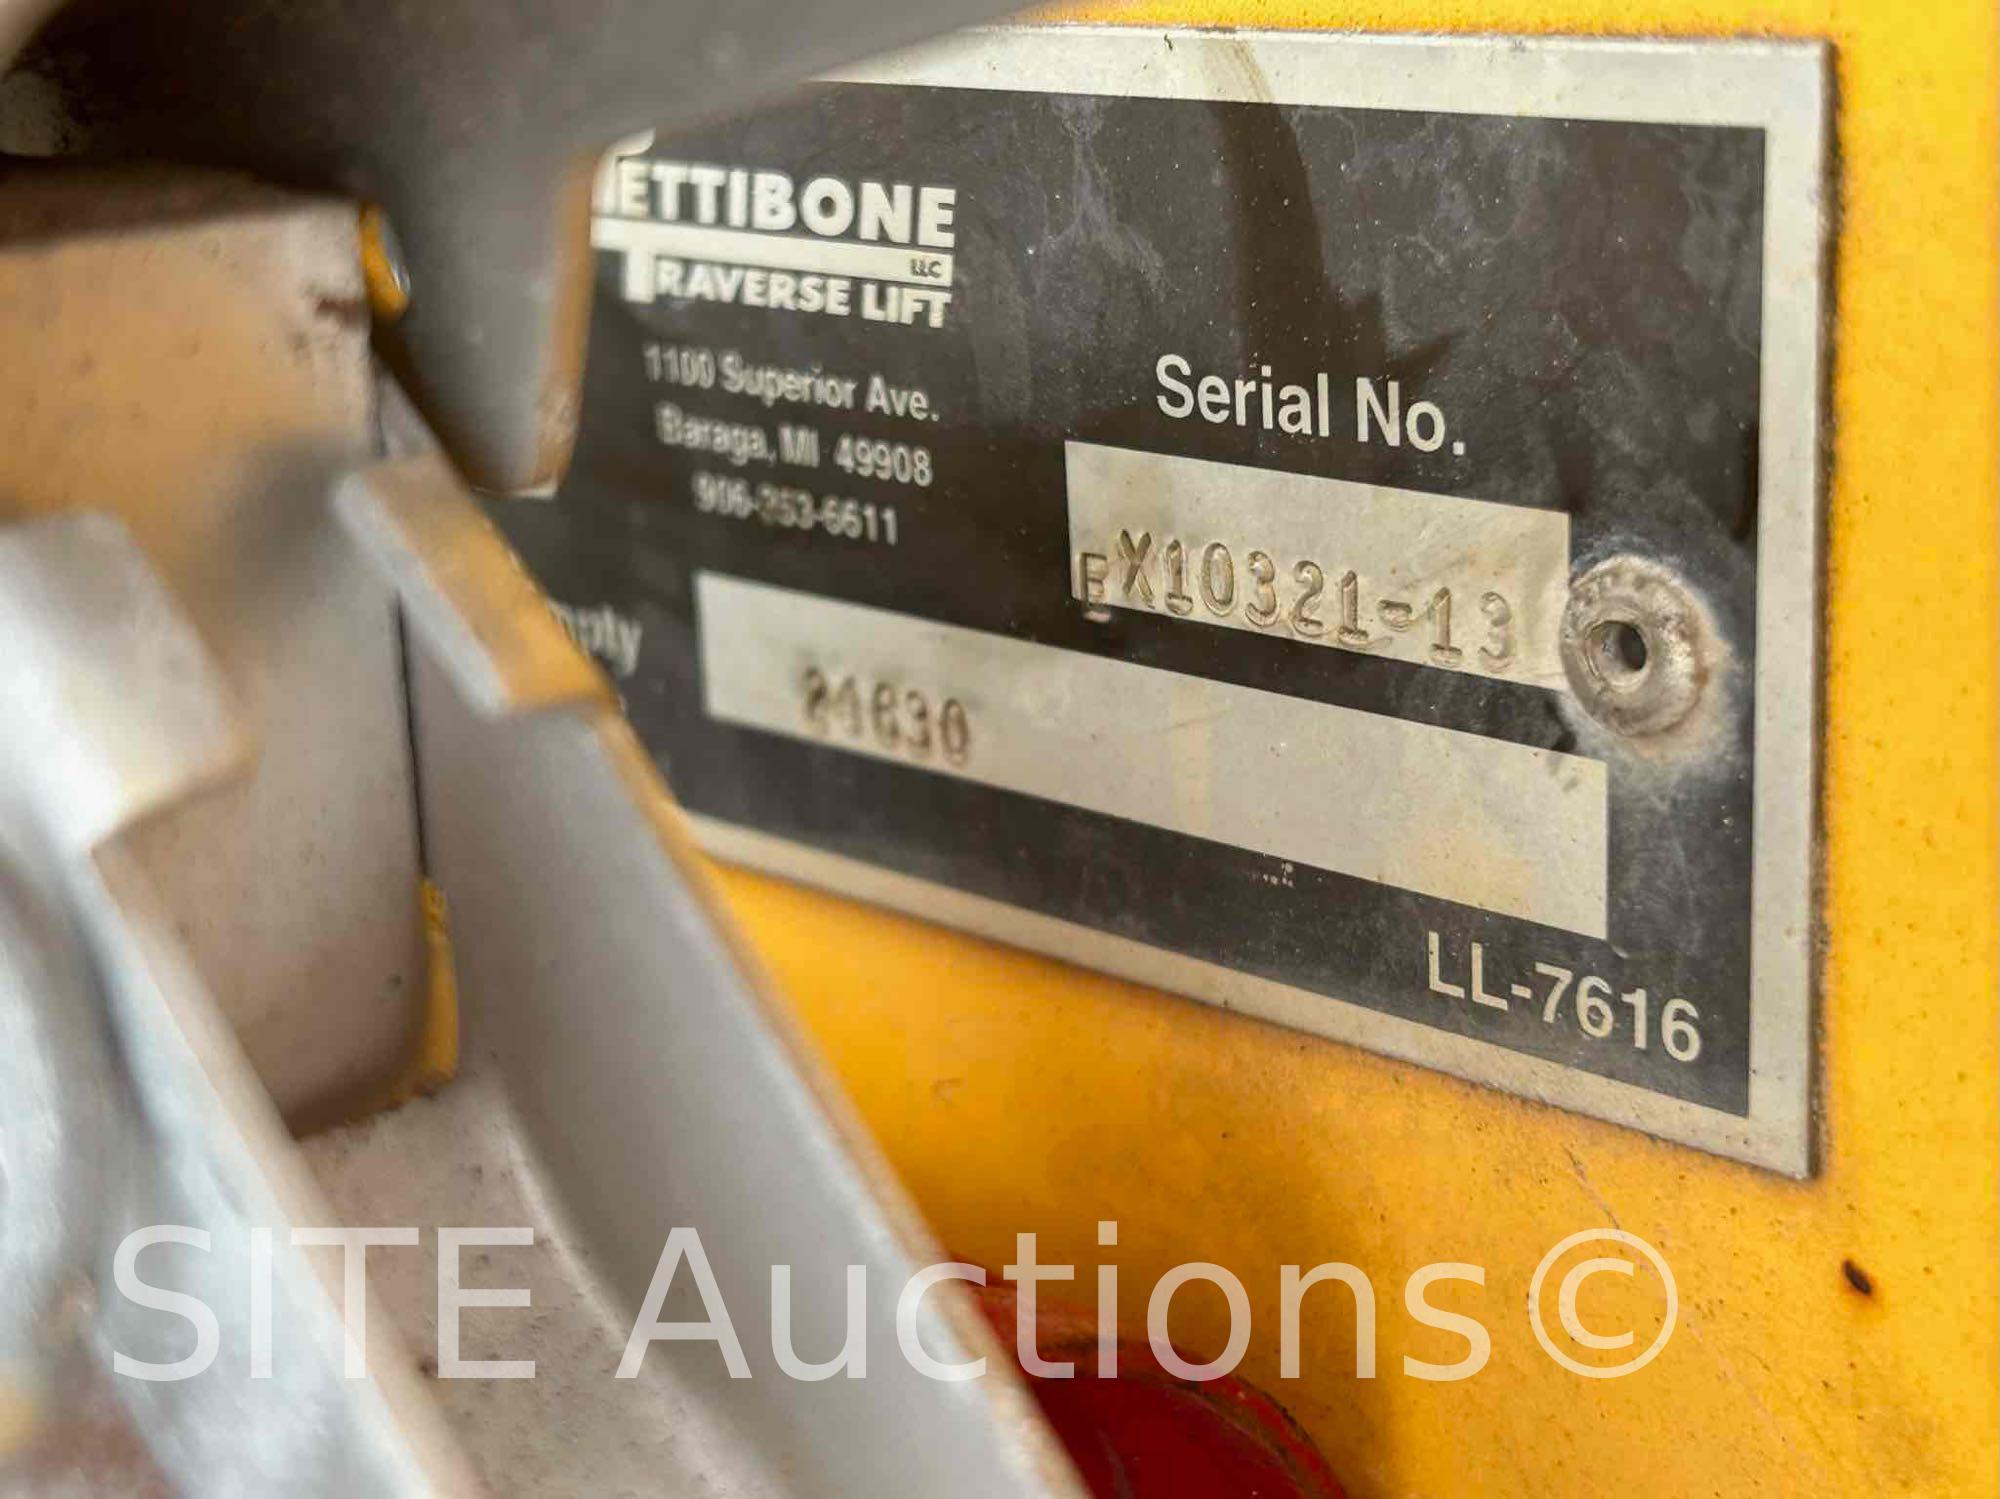 2013 Pettibone 944 Extendo 4x4x4 Telescopic Forklift